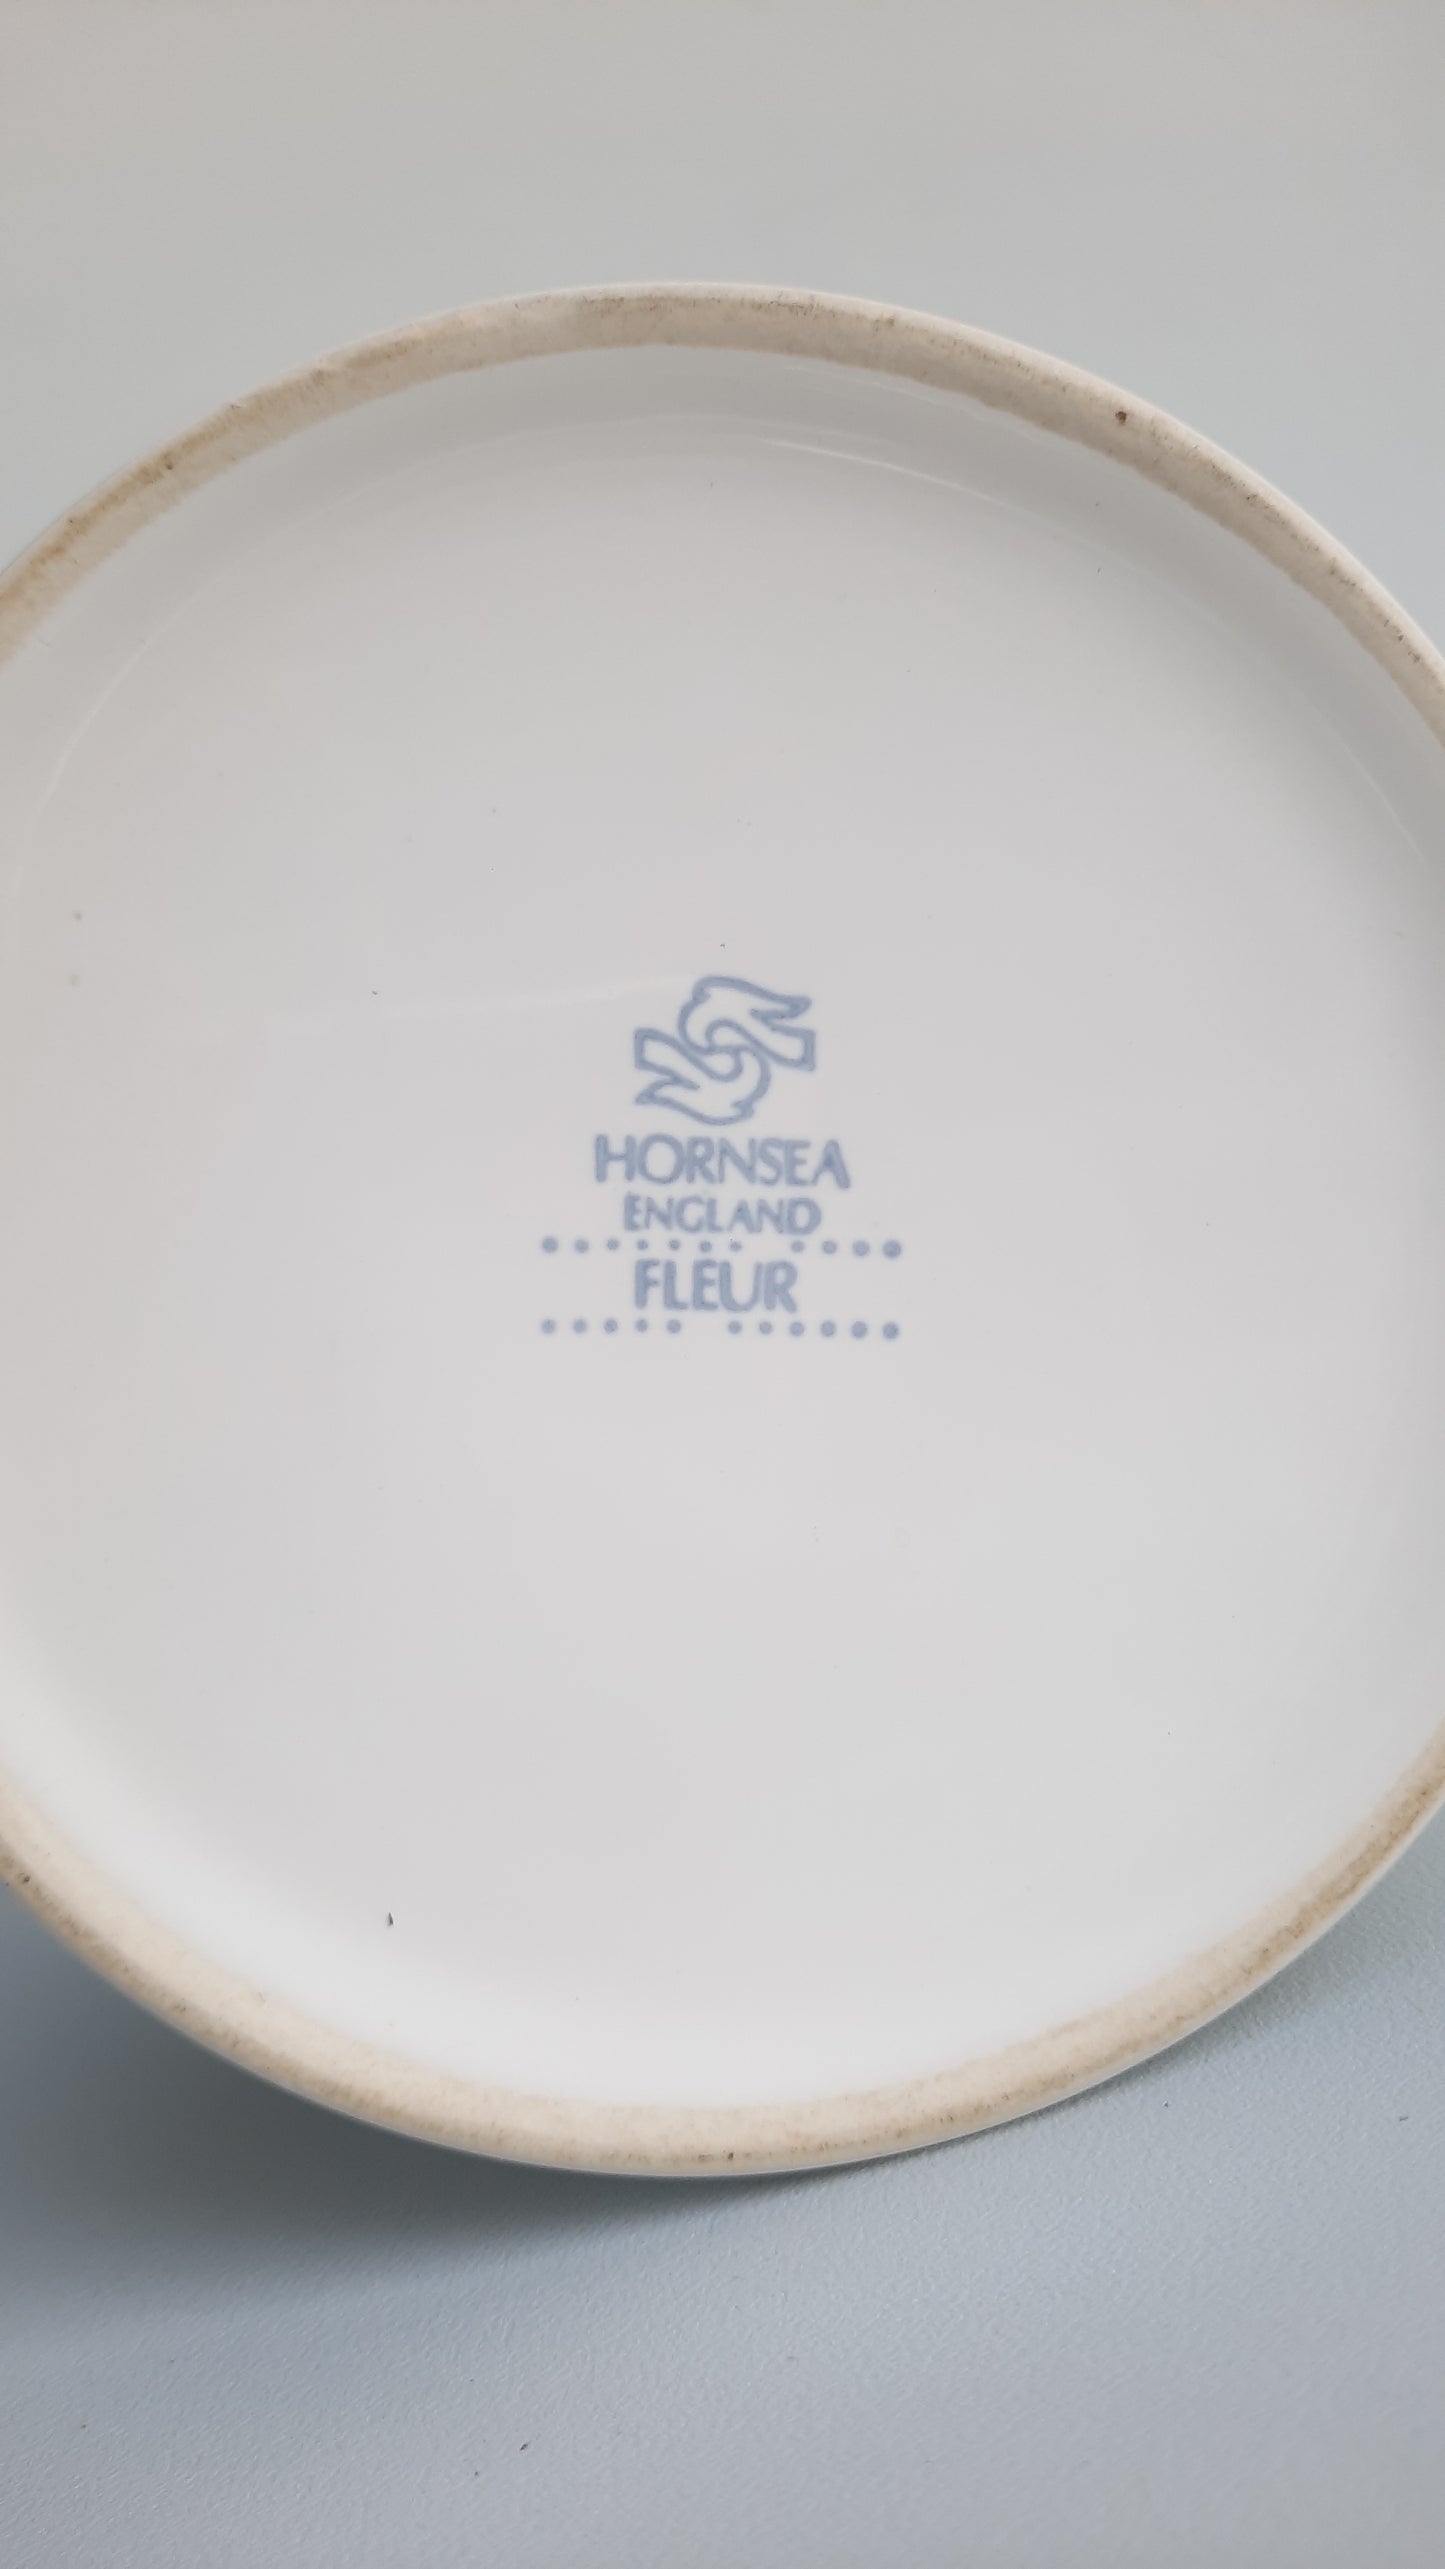 Vintage Hornsea "Fleur" Ceramic Coffee Pot